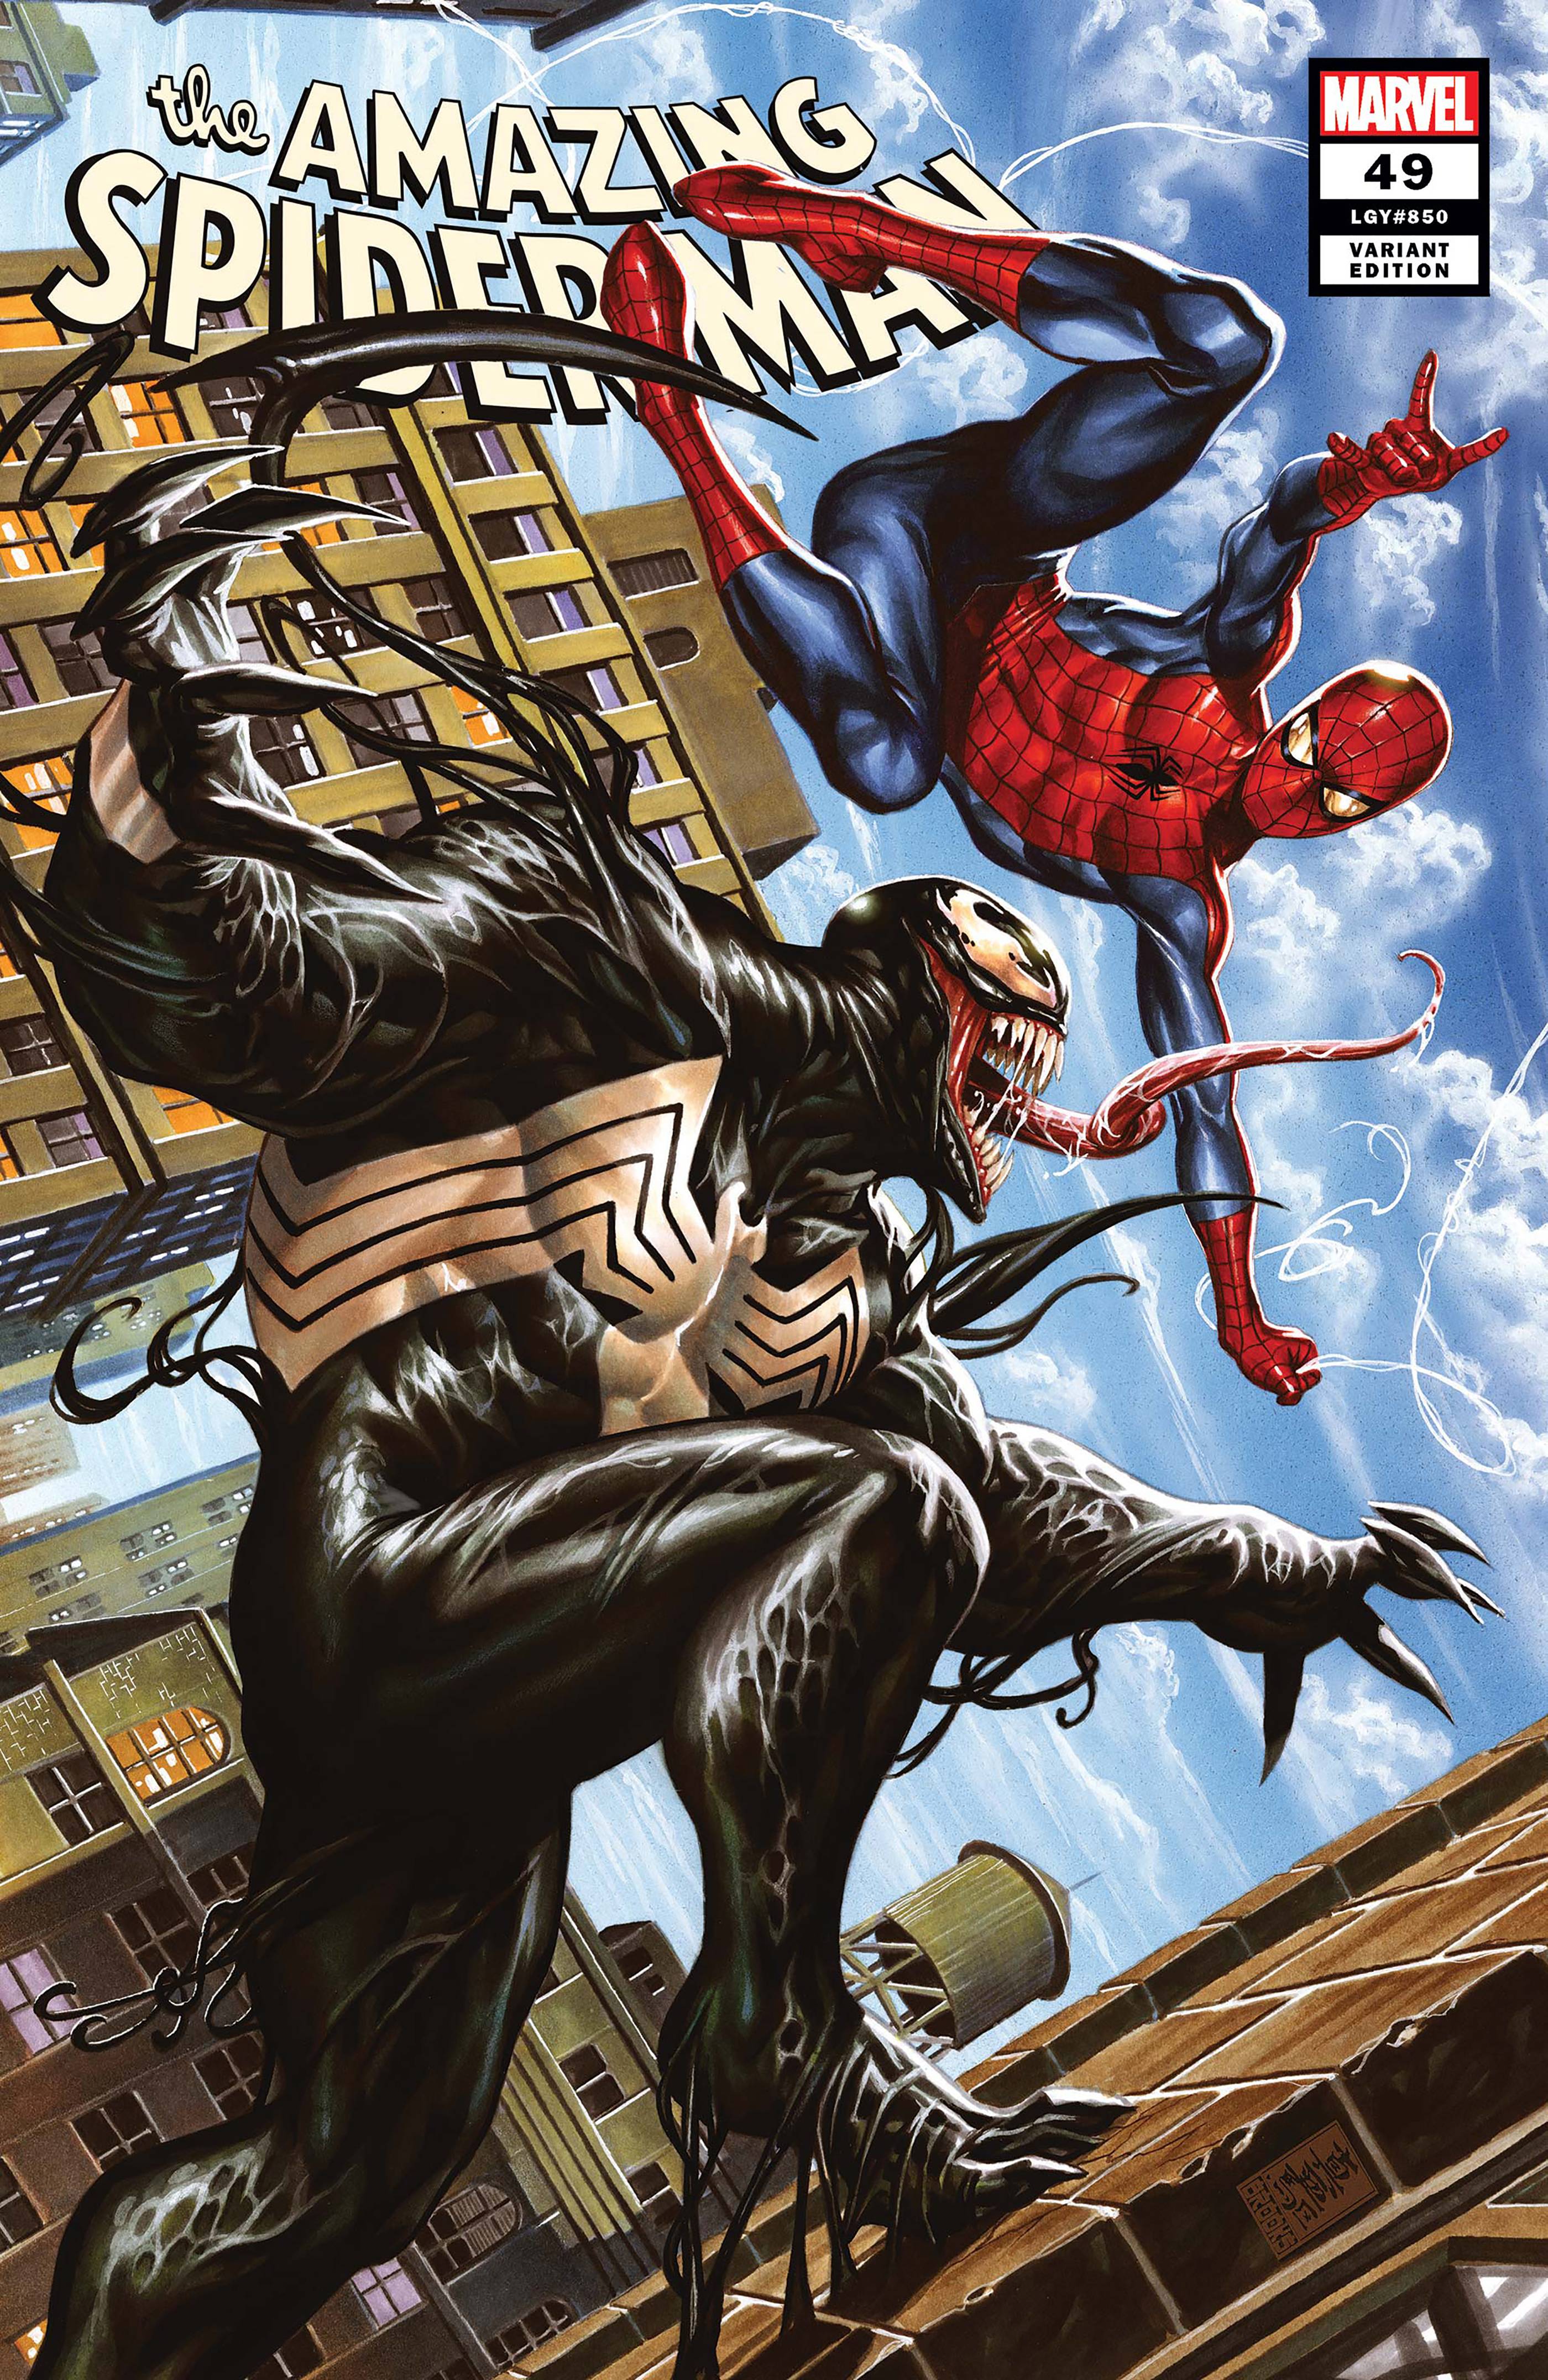 AMAZING SPIDER-MAN #49 MARVEL COMICS/2020 - RYAN OTTLEY ART & MAIN COVER 850 